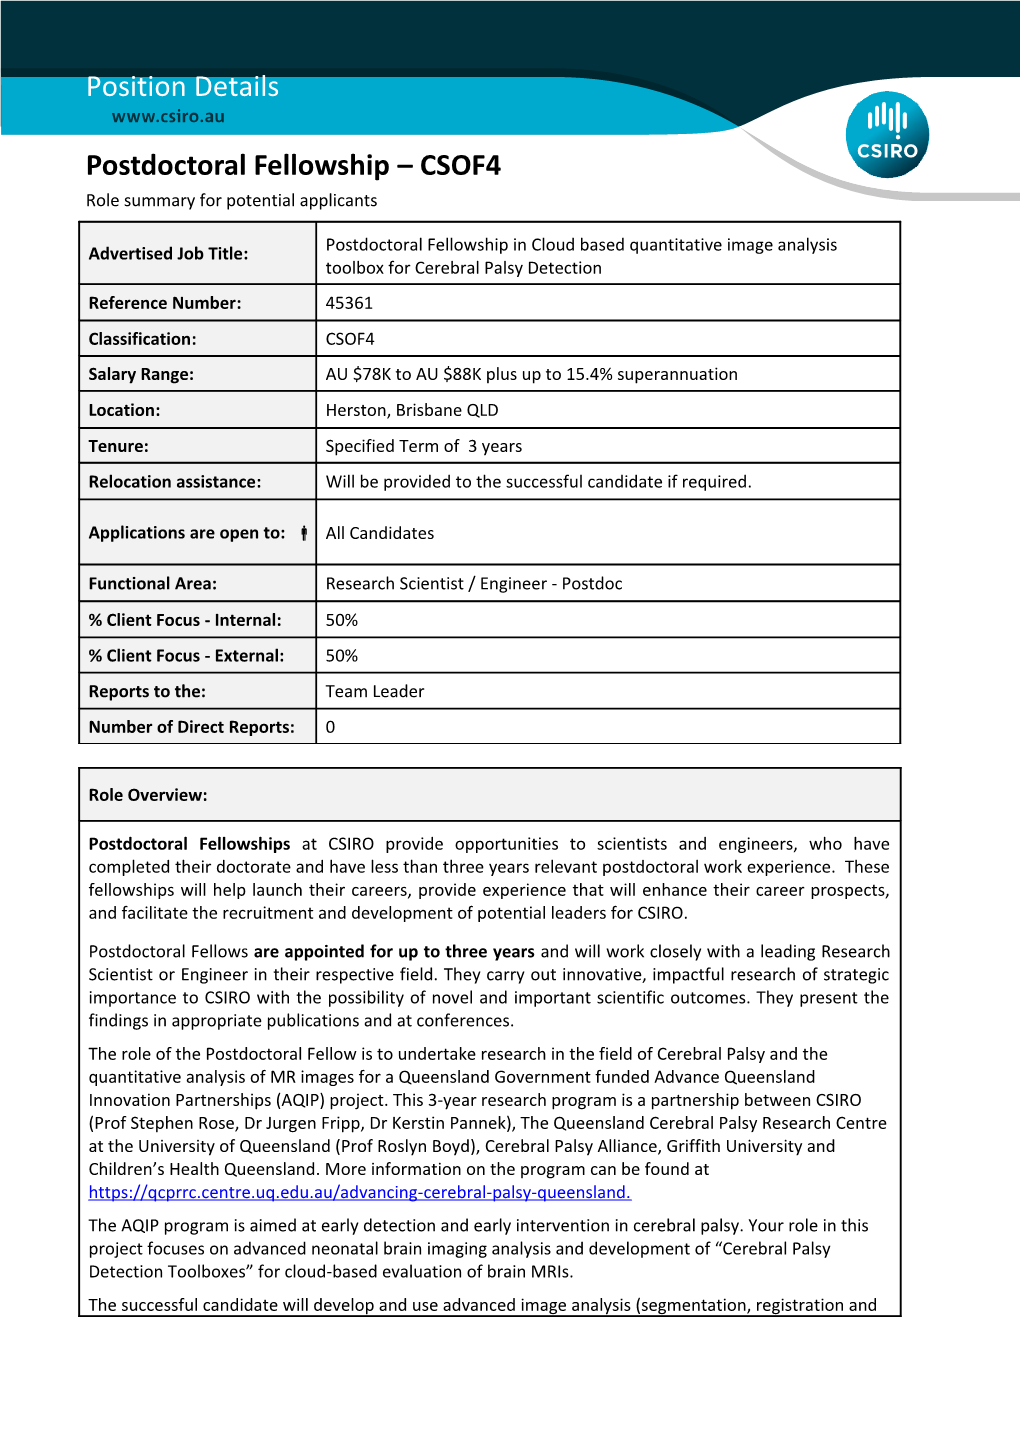 Position Details - Postdoctoral Fellowship - CSOF4 s5